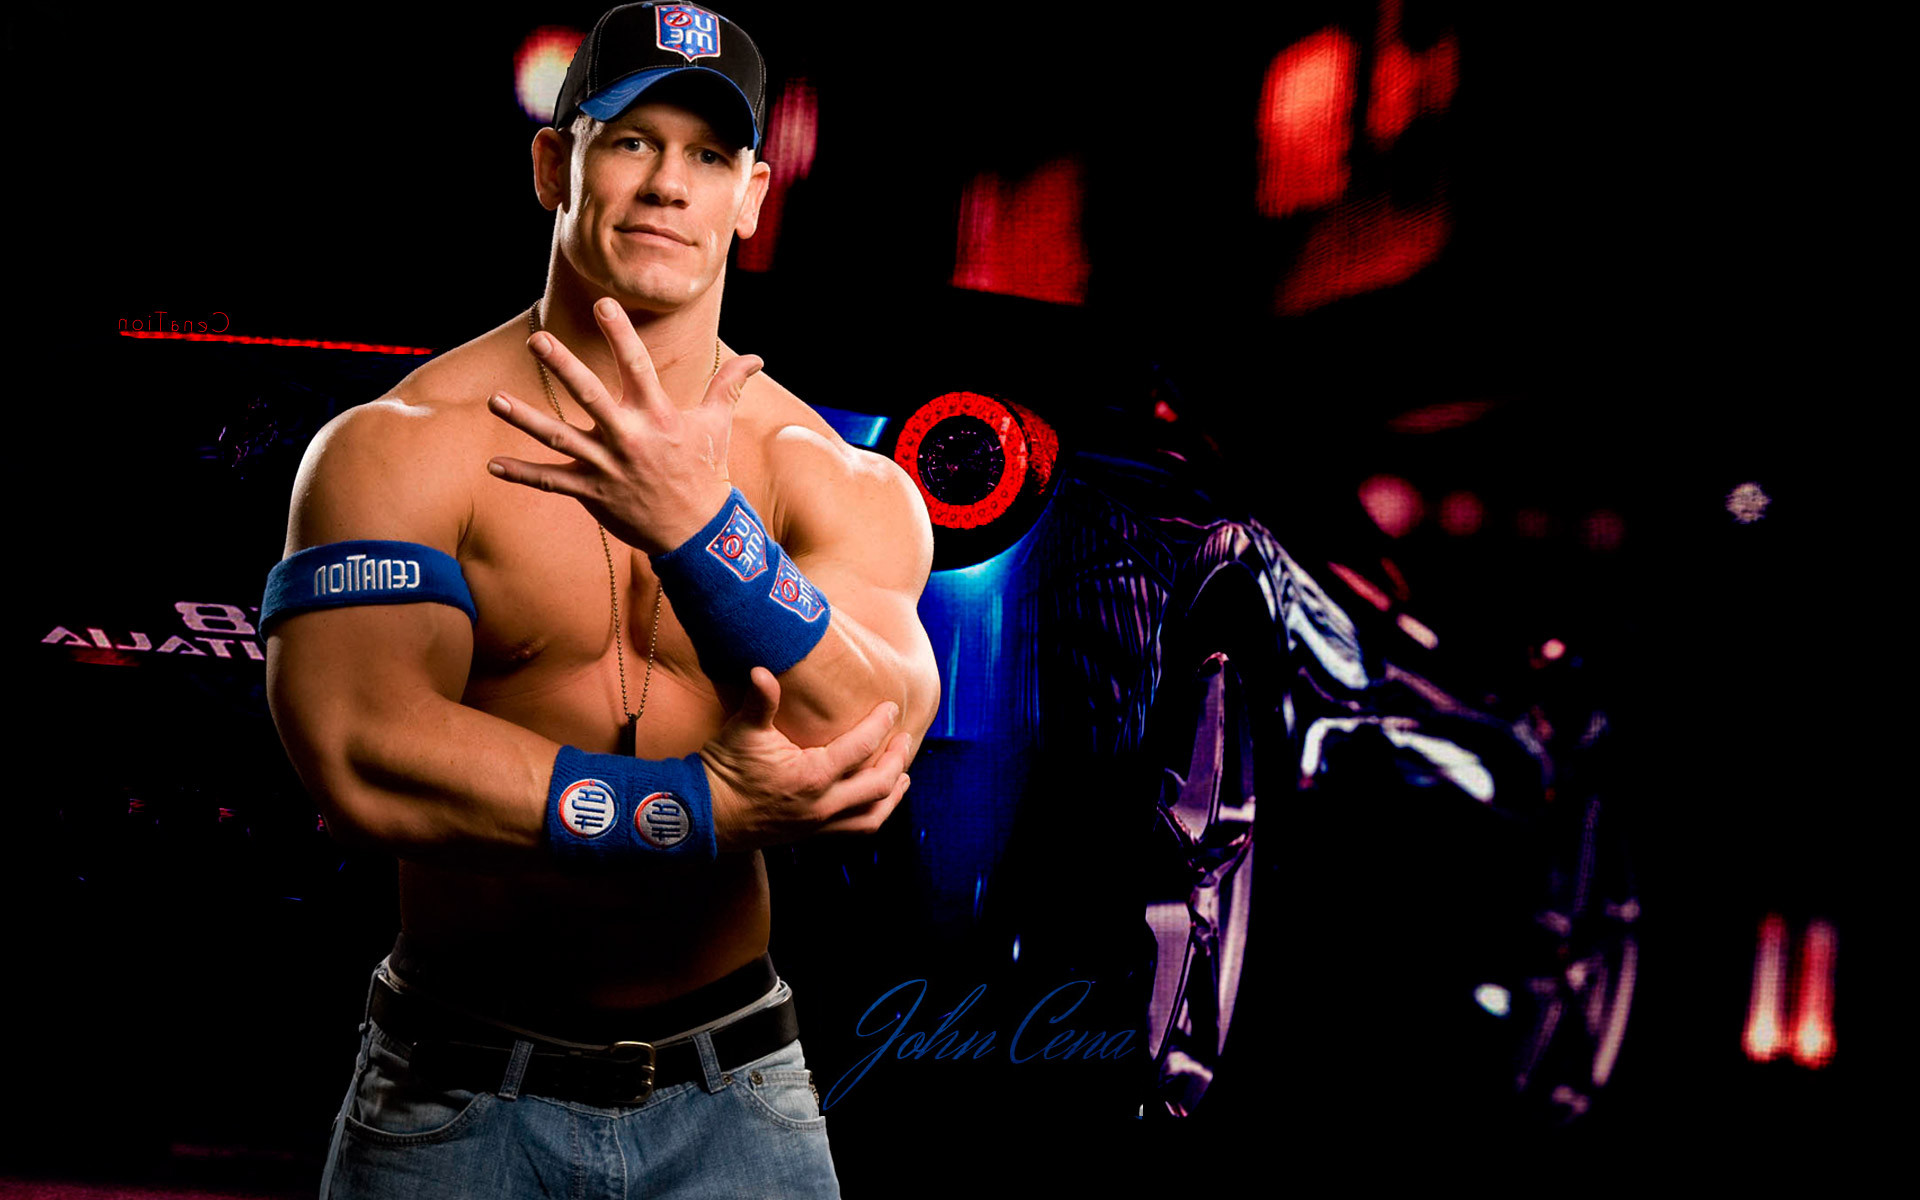 Wwe John Cena Wallpaper HD Image